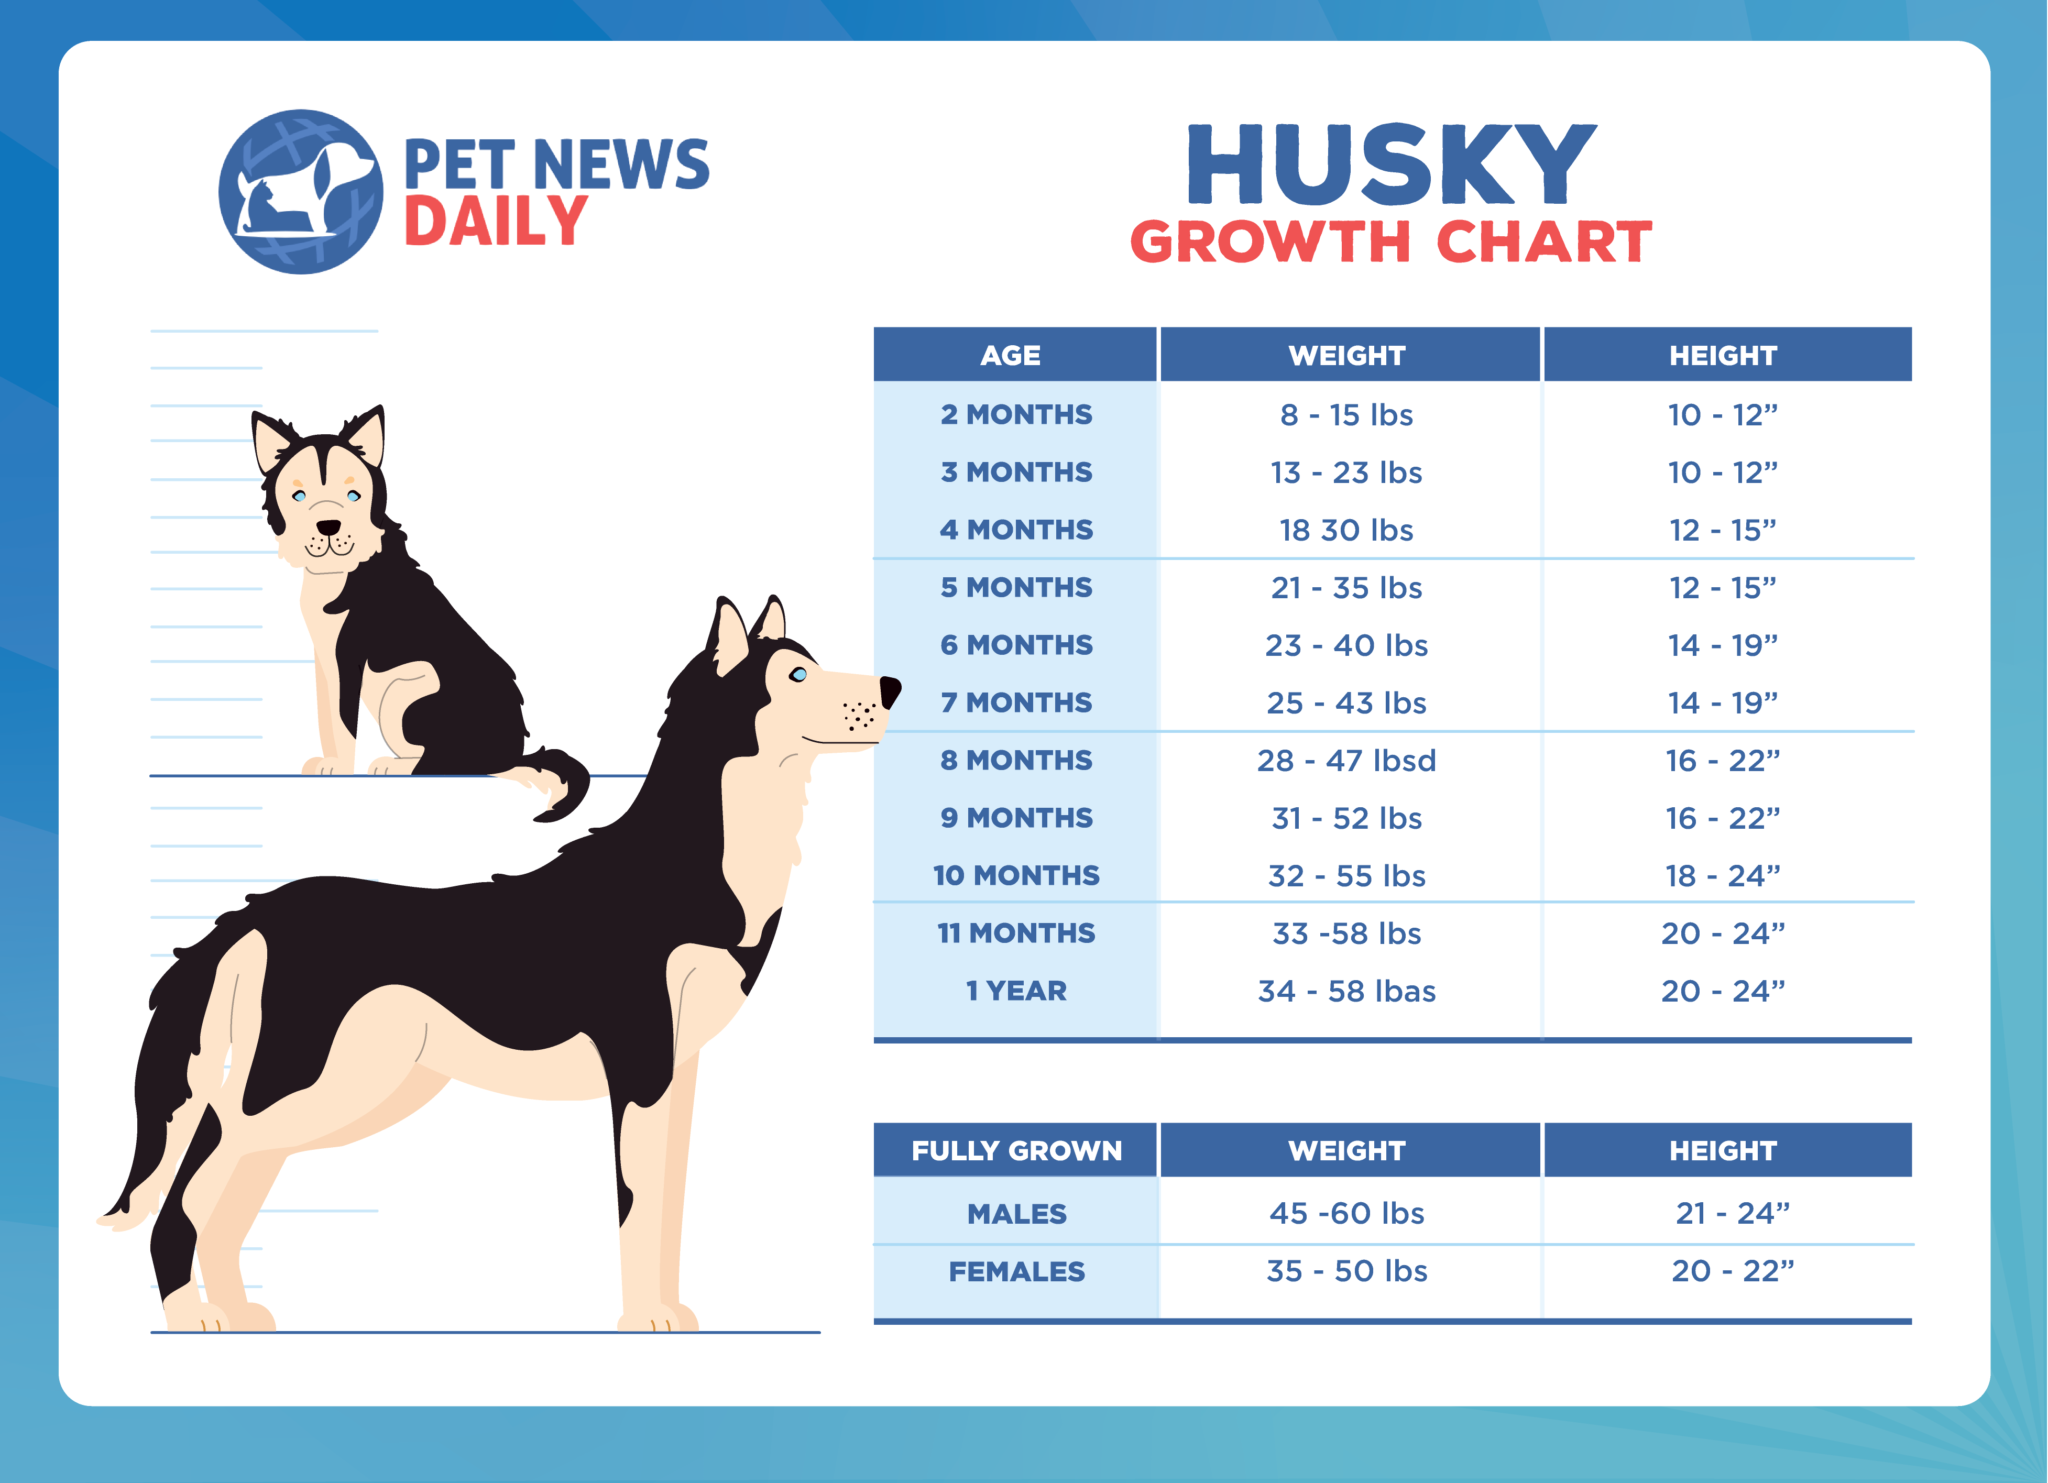 Husky Growth Chart How Big Will Your Husky Get? Pet News Daily